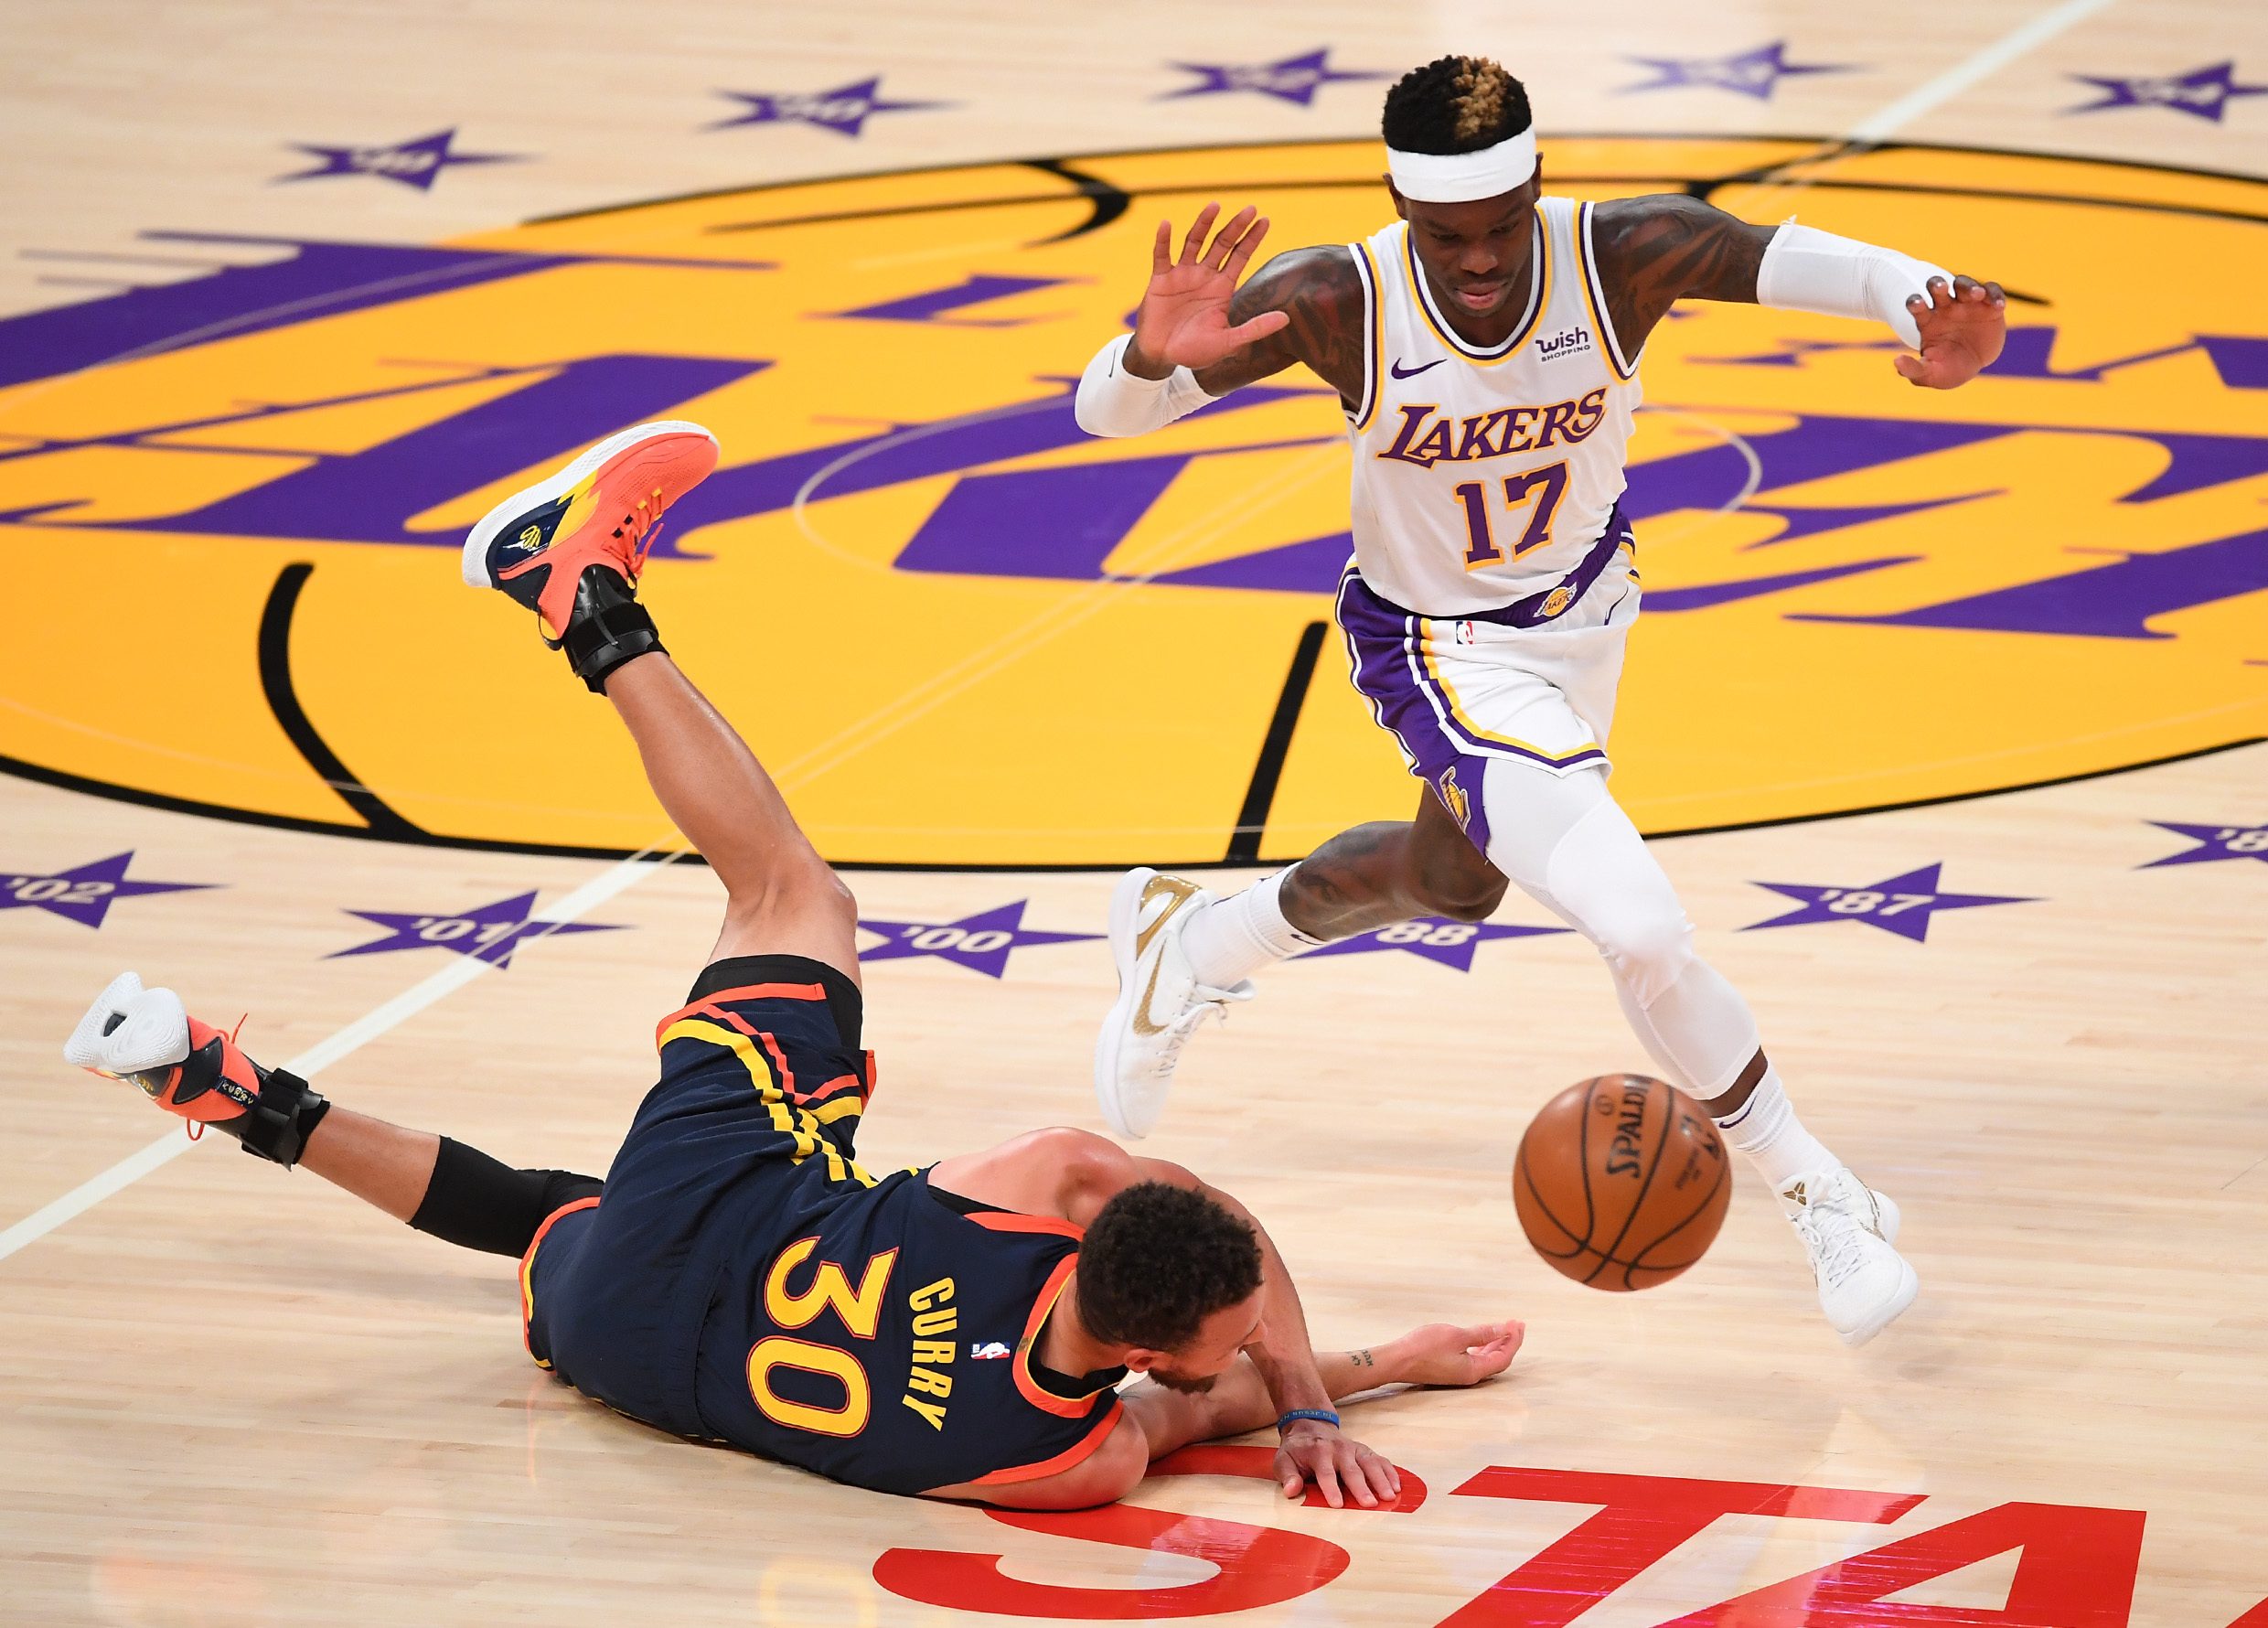 How Warriors failed to show discipline, focus against elite Lakers